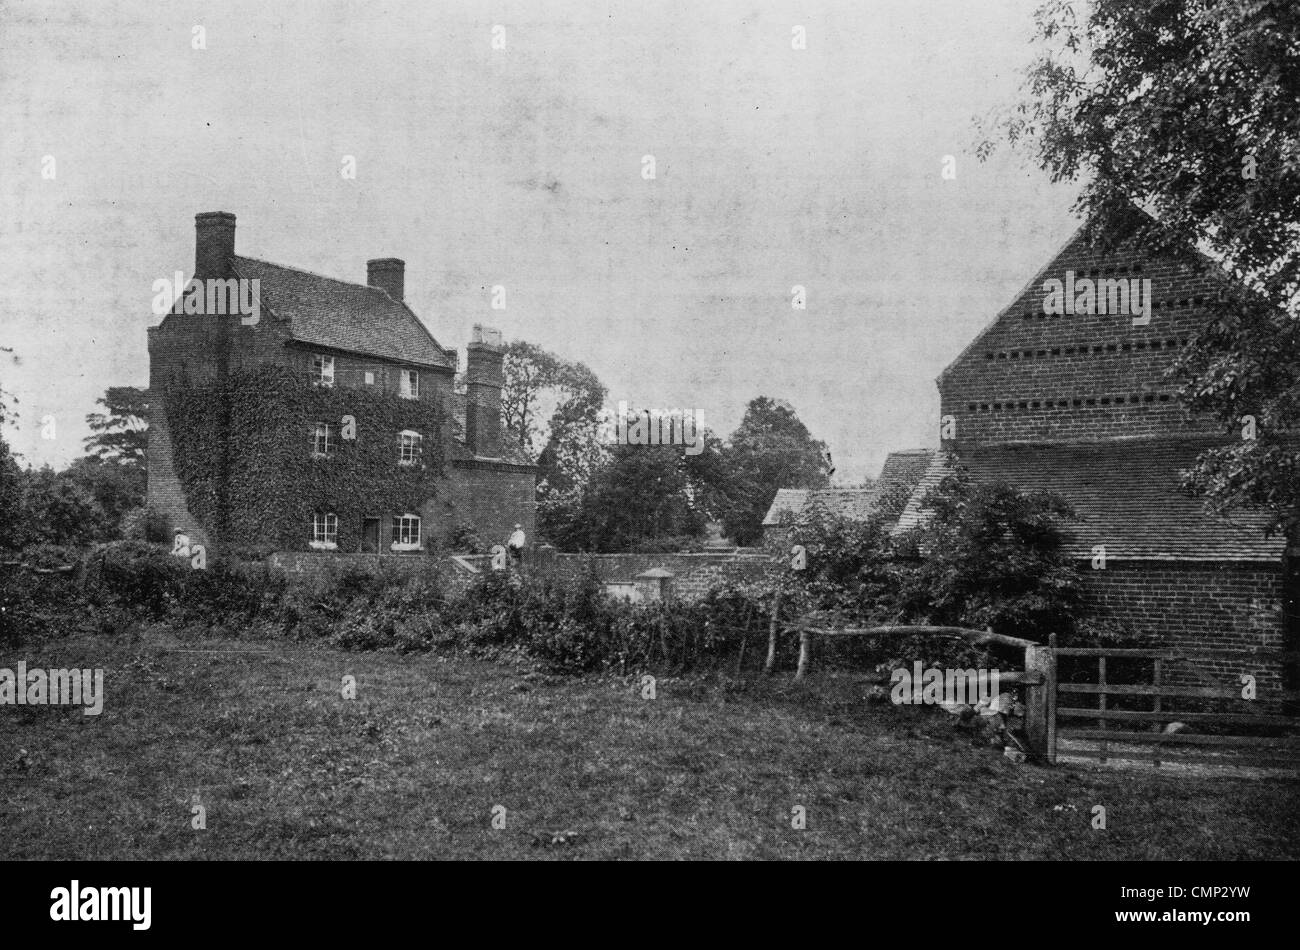 Pear Tree Farm, Wolverhampton, 1901. The farmhouse and outbuildings. Farms, Farming, Photographs Stock Photo